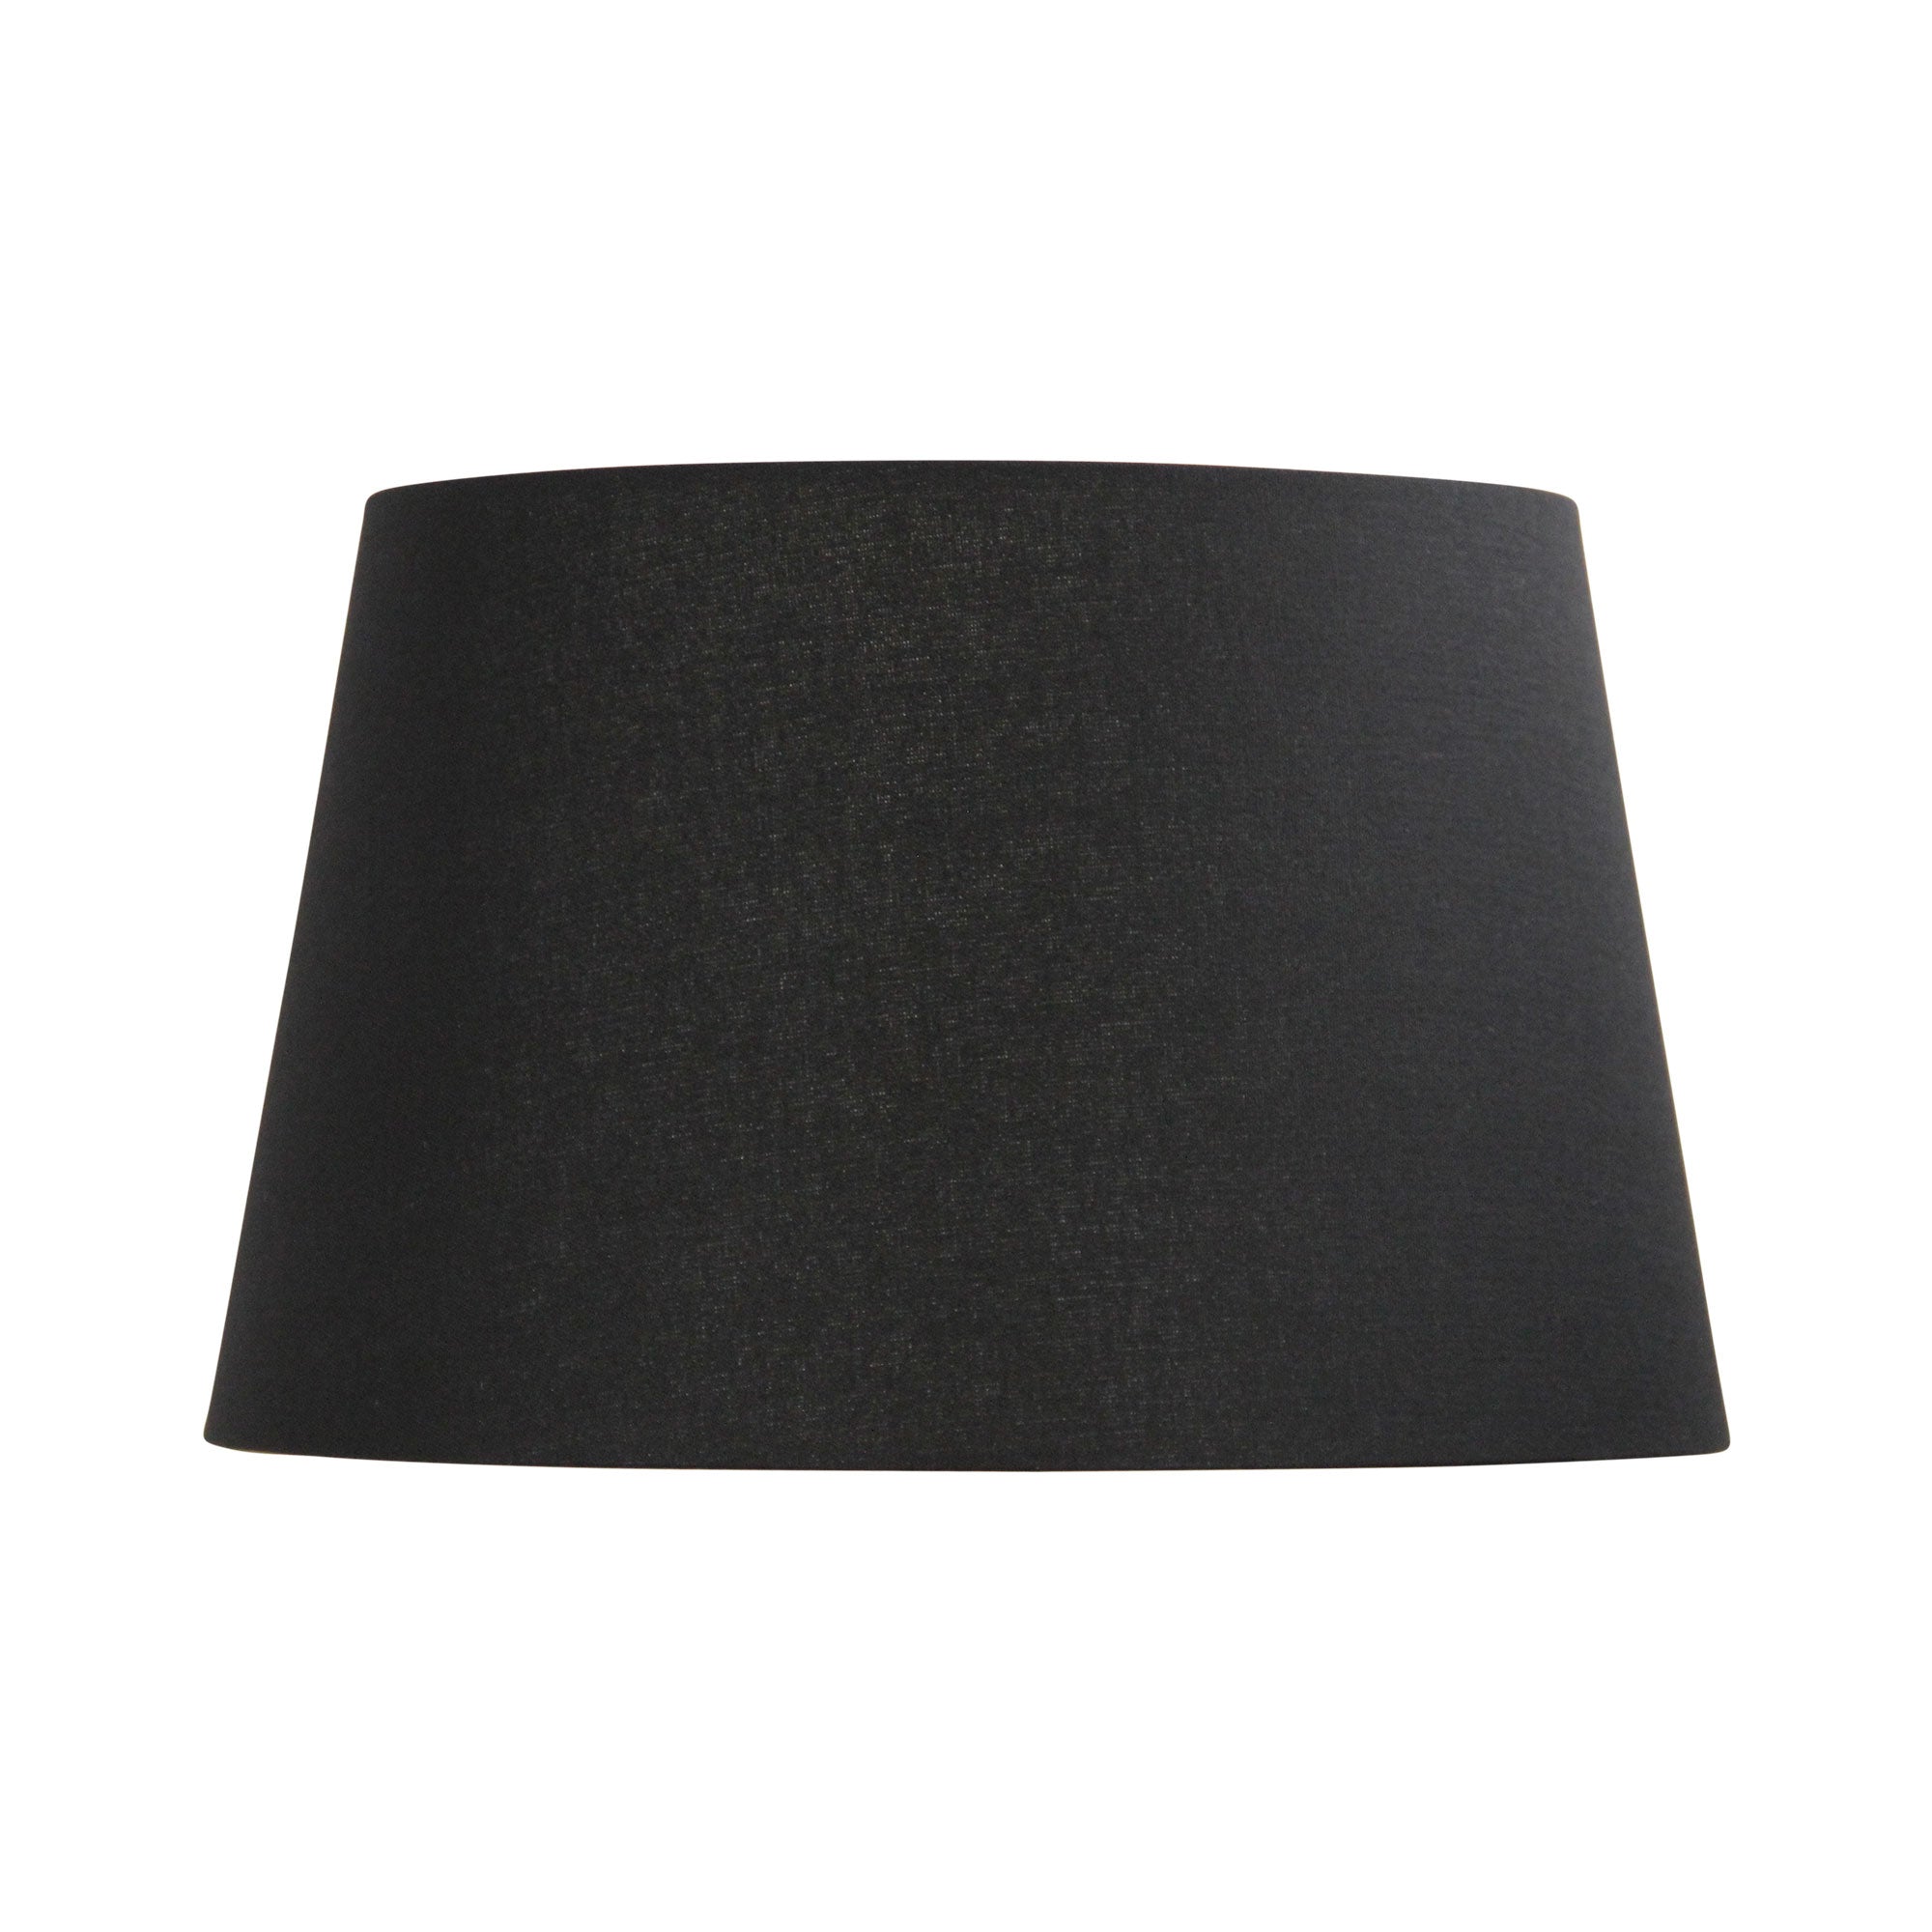 Oriel Lighting 43cm Floor Lamp Shade Black Linen Hardback